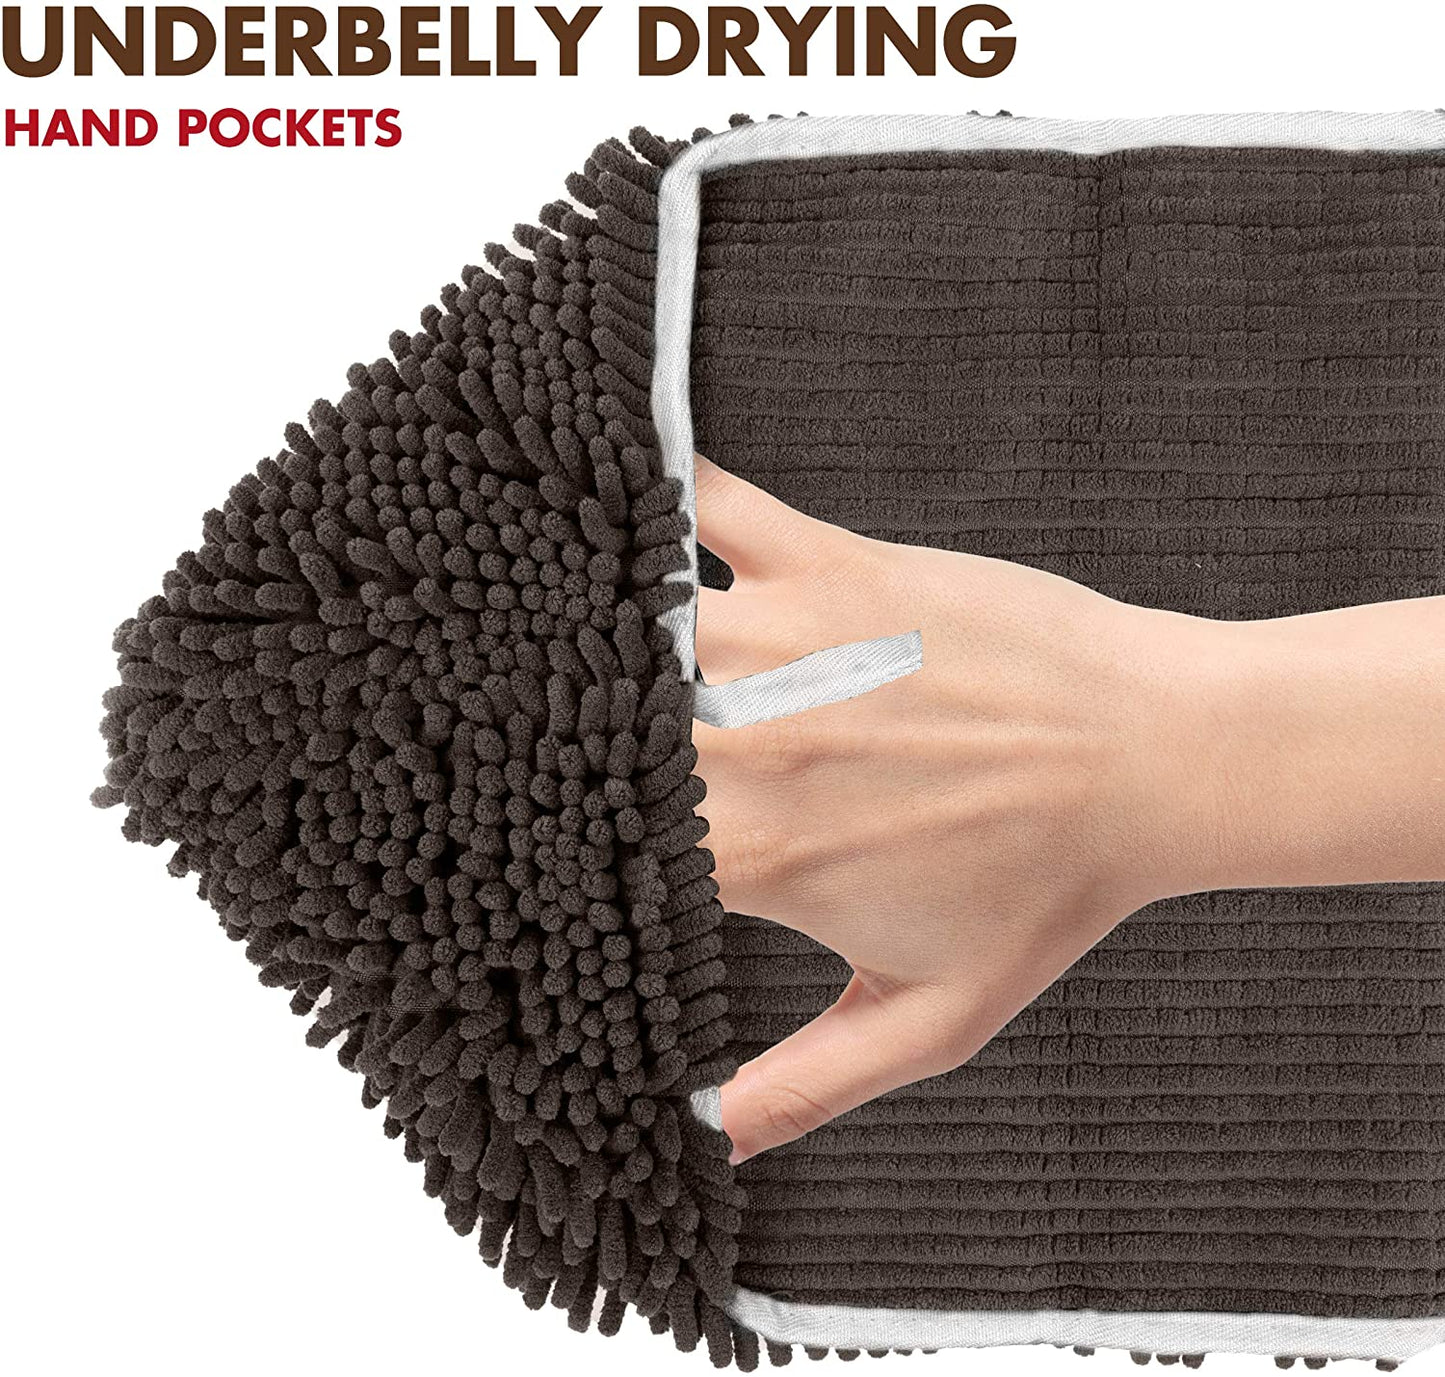 Absorbent Microfiber Dog Towel - Quick Dry Towel - Multi-Color Options